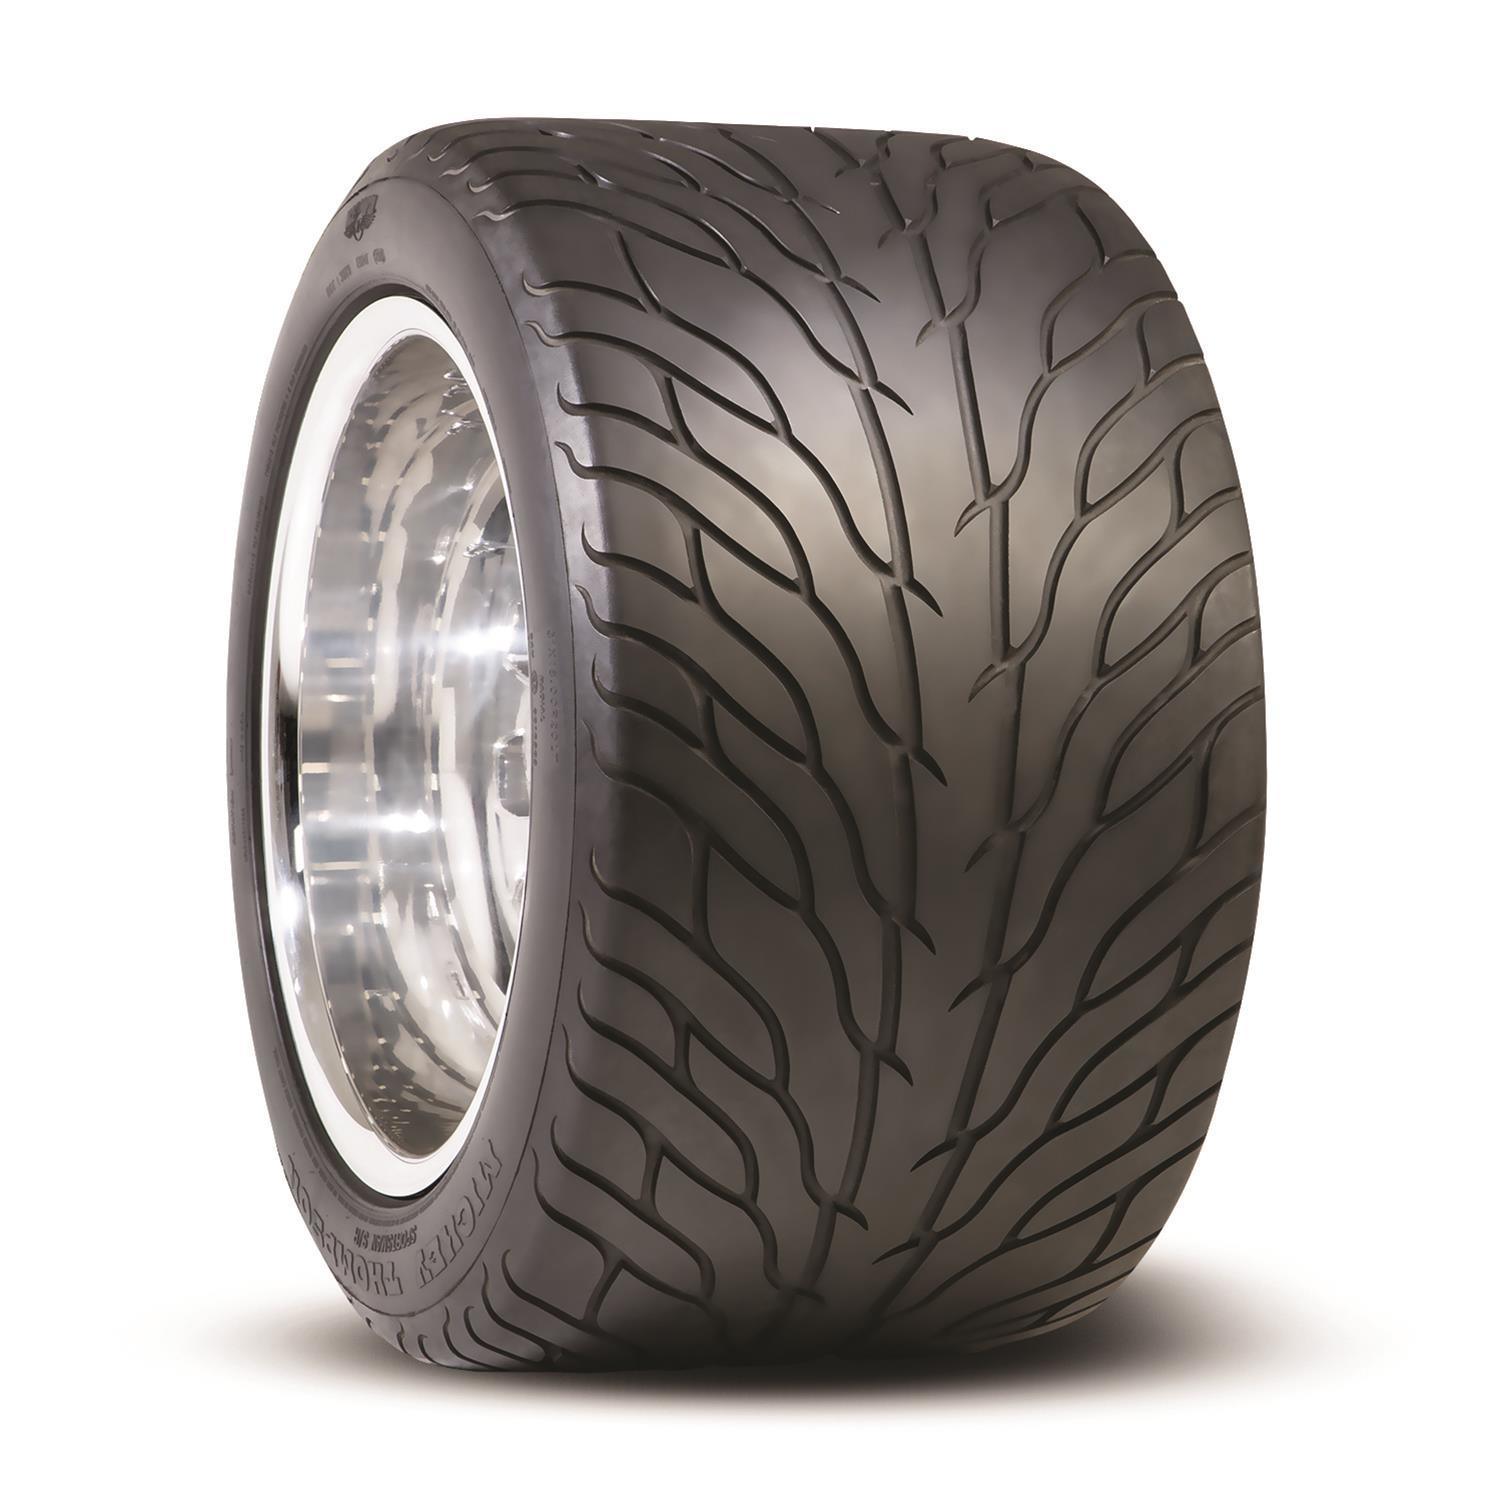 26x8.00R15LT Sportsman S/R Radial Tire - Burlile Performance Products